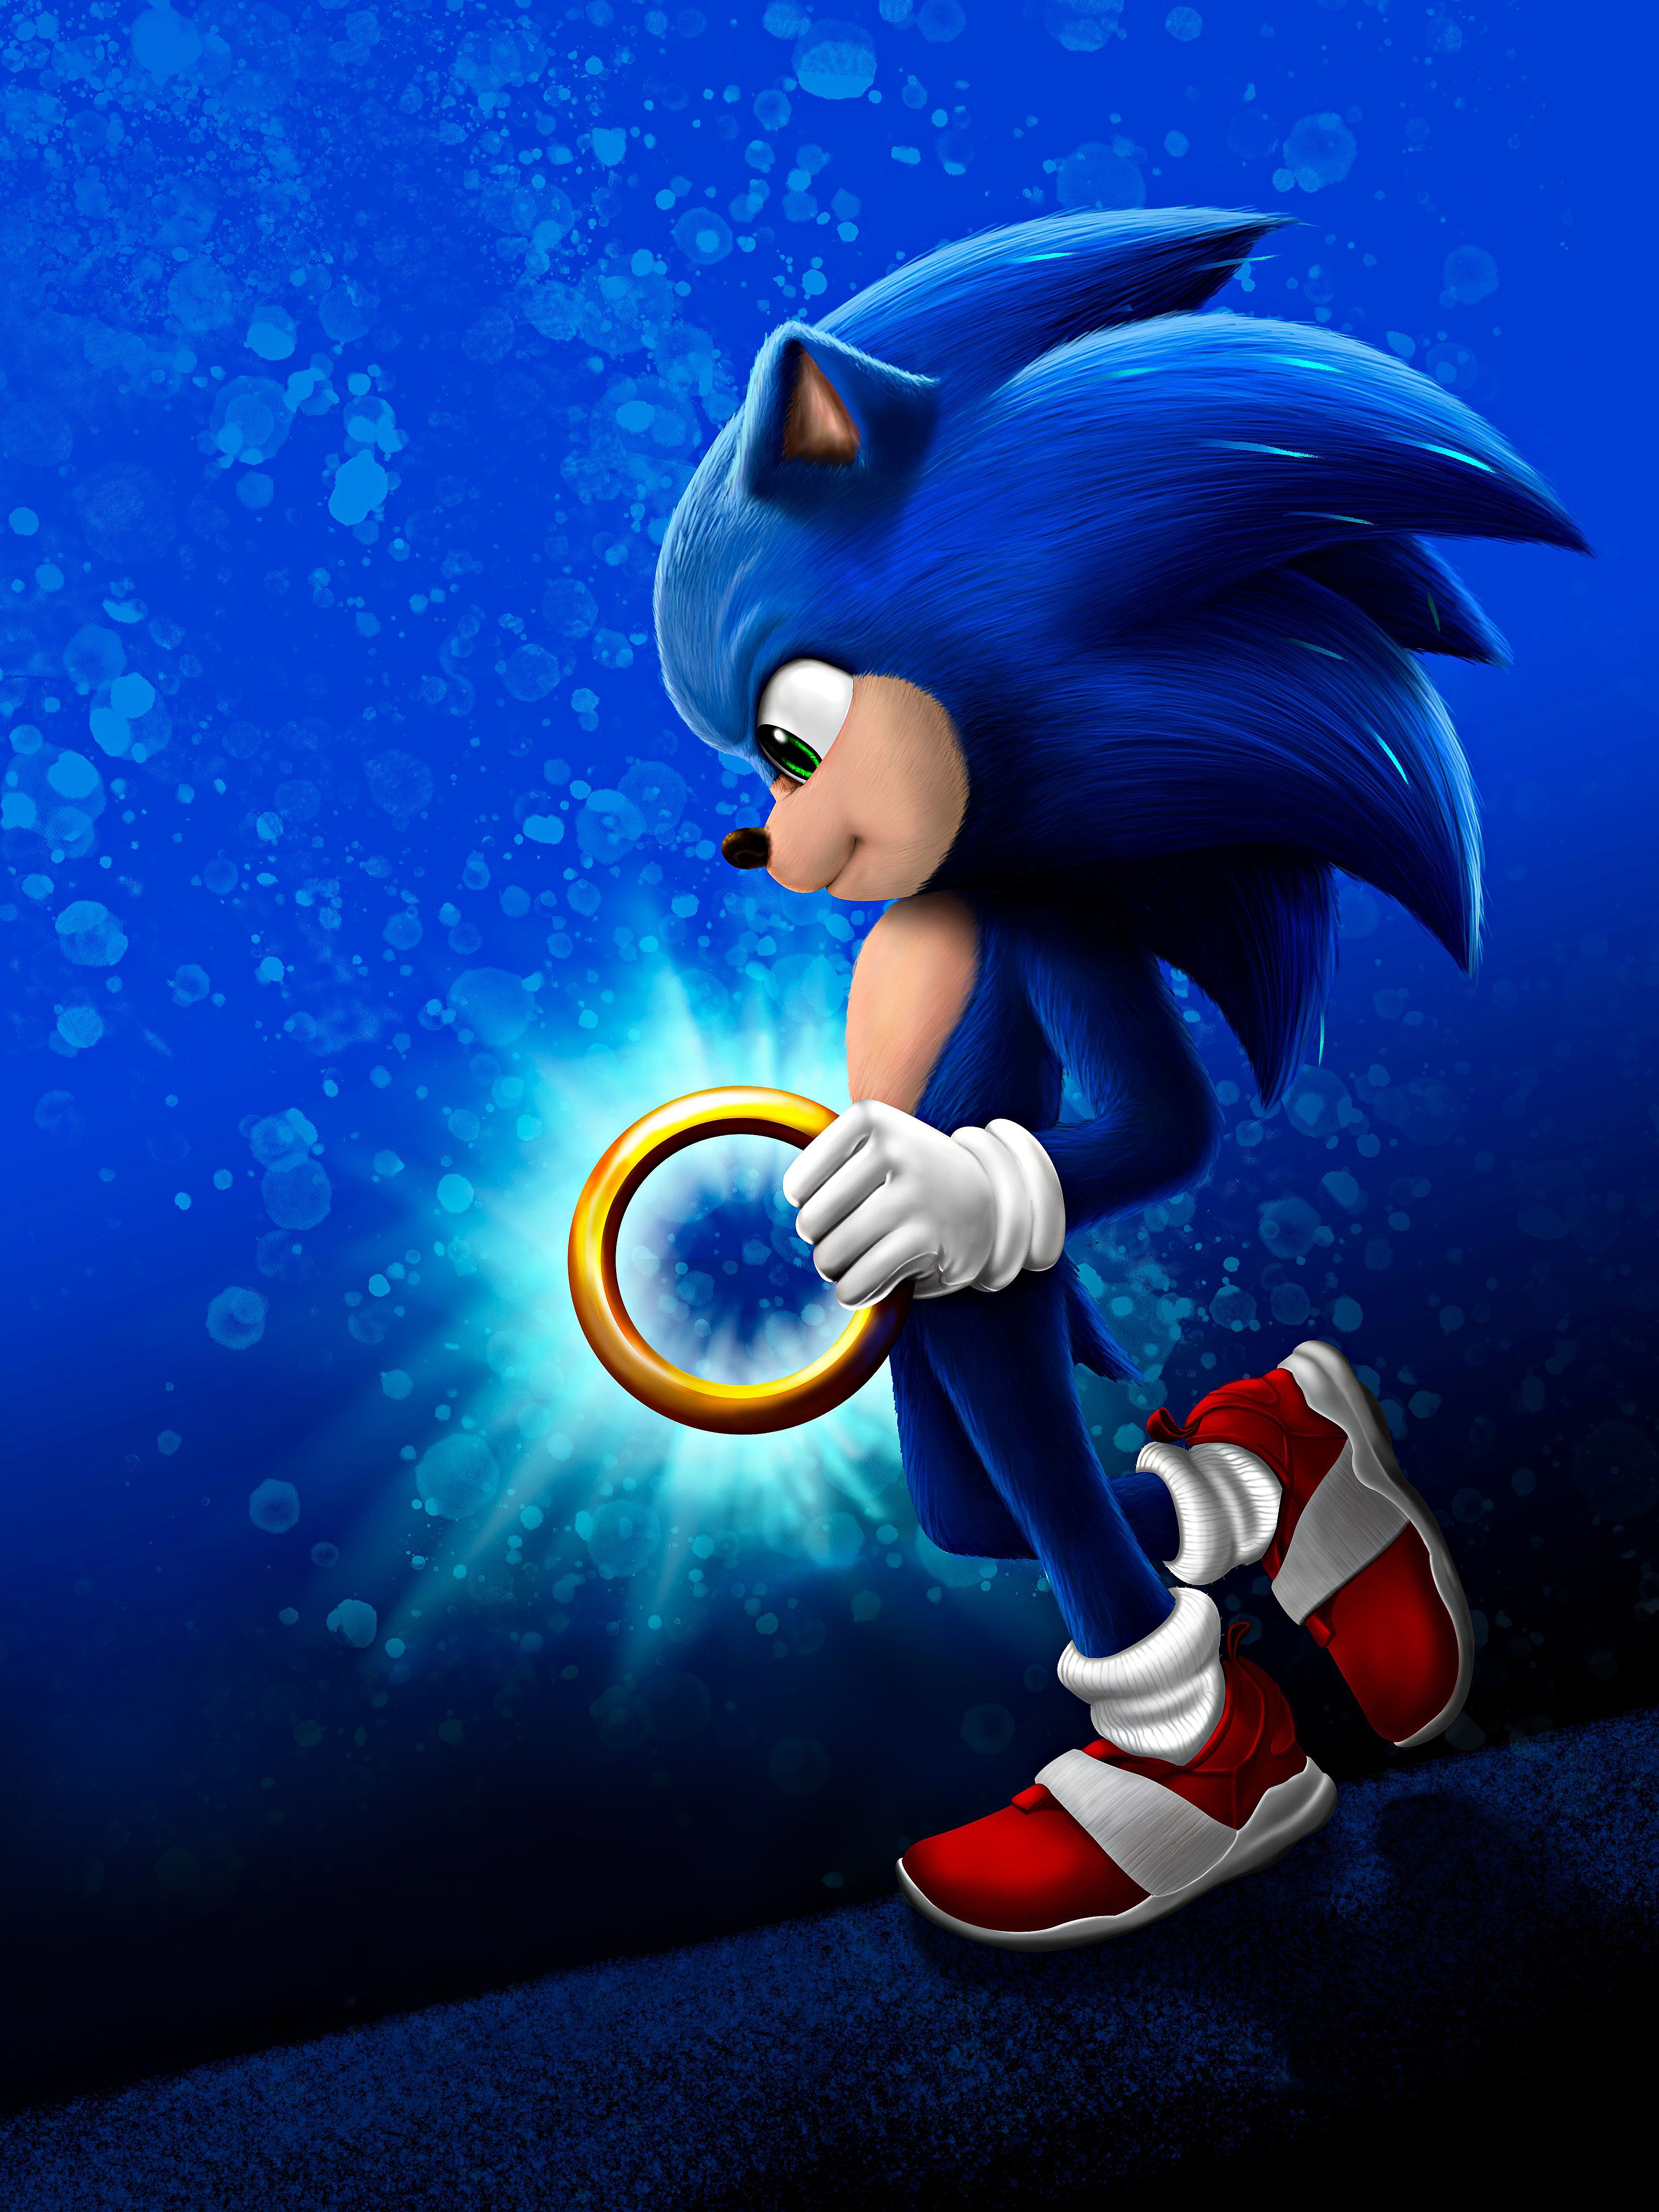 Sonic The Hedgehog Archie Comics  Omniversal Battlefield Wiki  Fandom